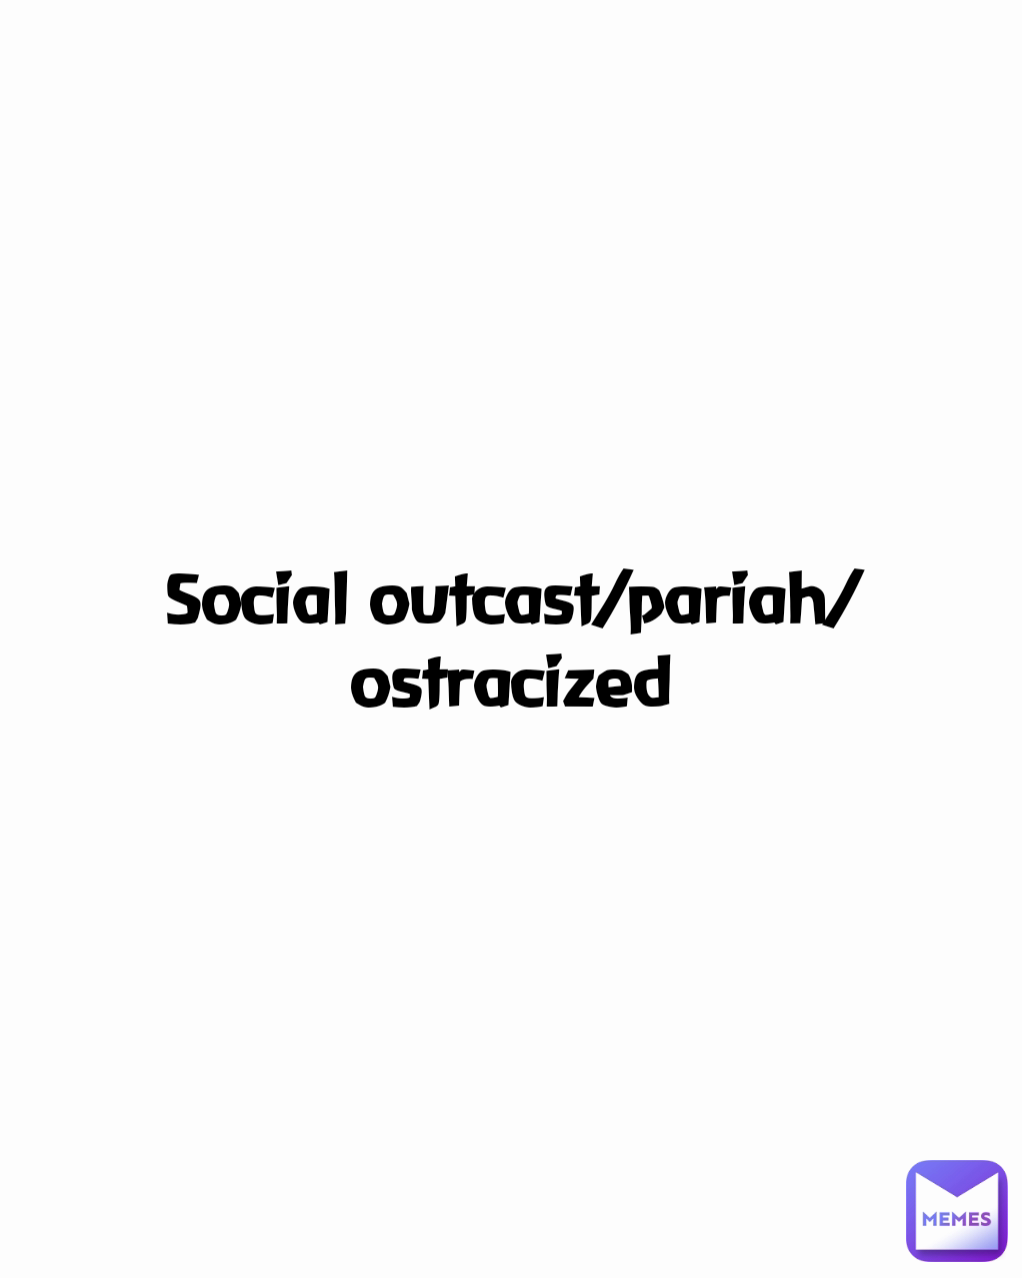 Social outcast/pariah/ostracized